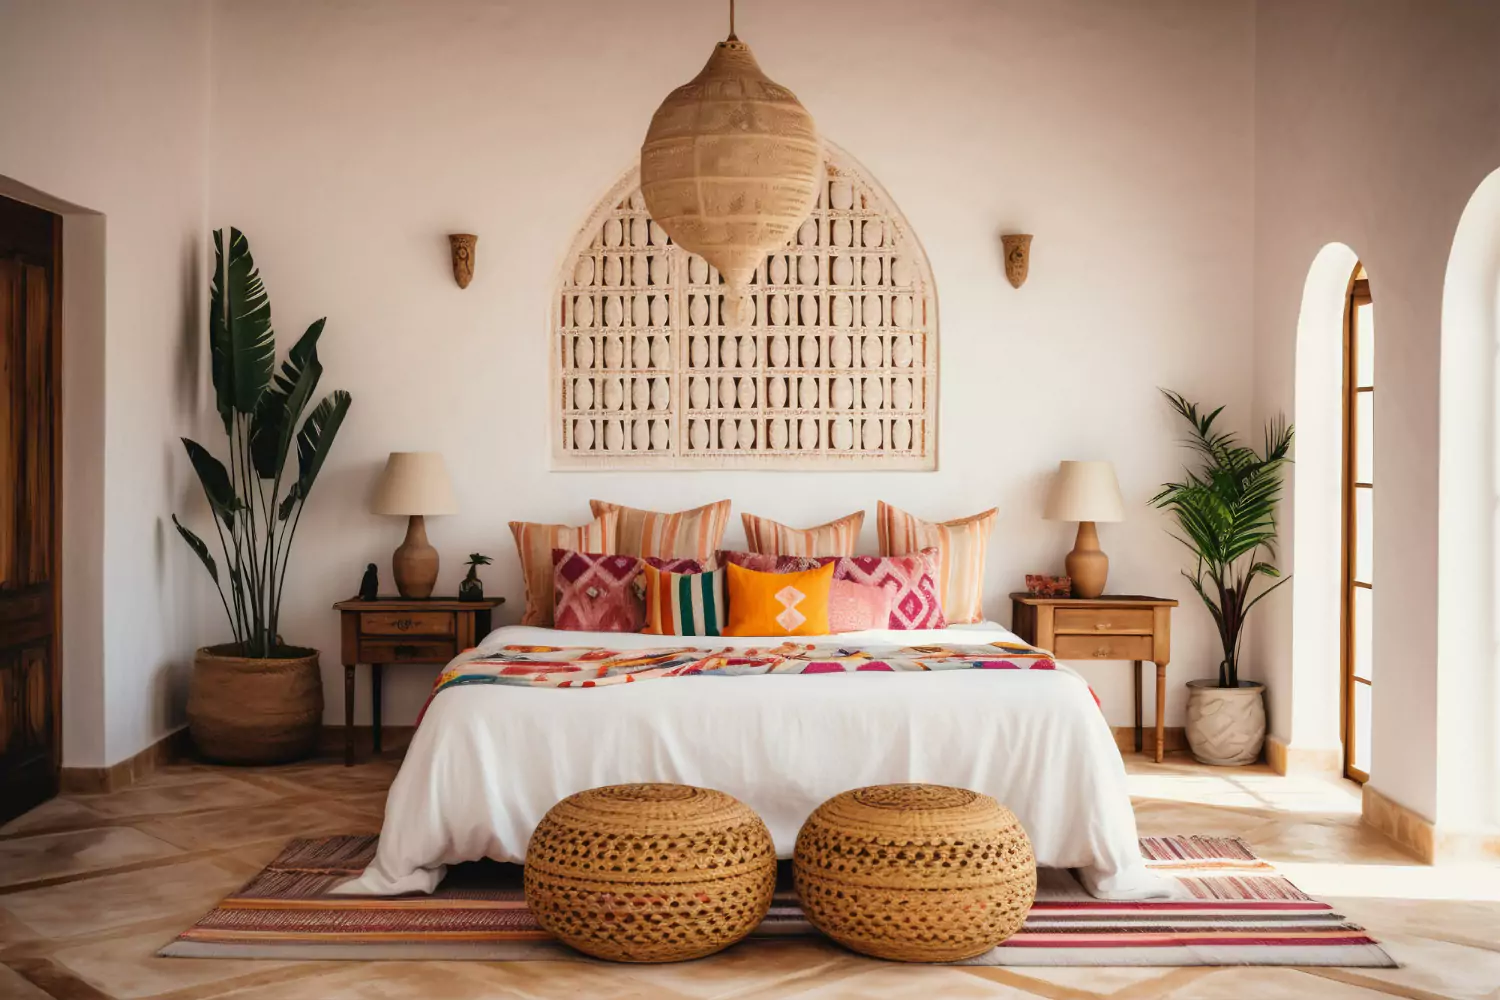 Home Decor Ideas for Living Room Amazon India